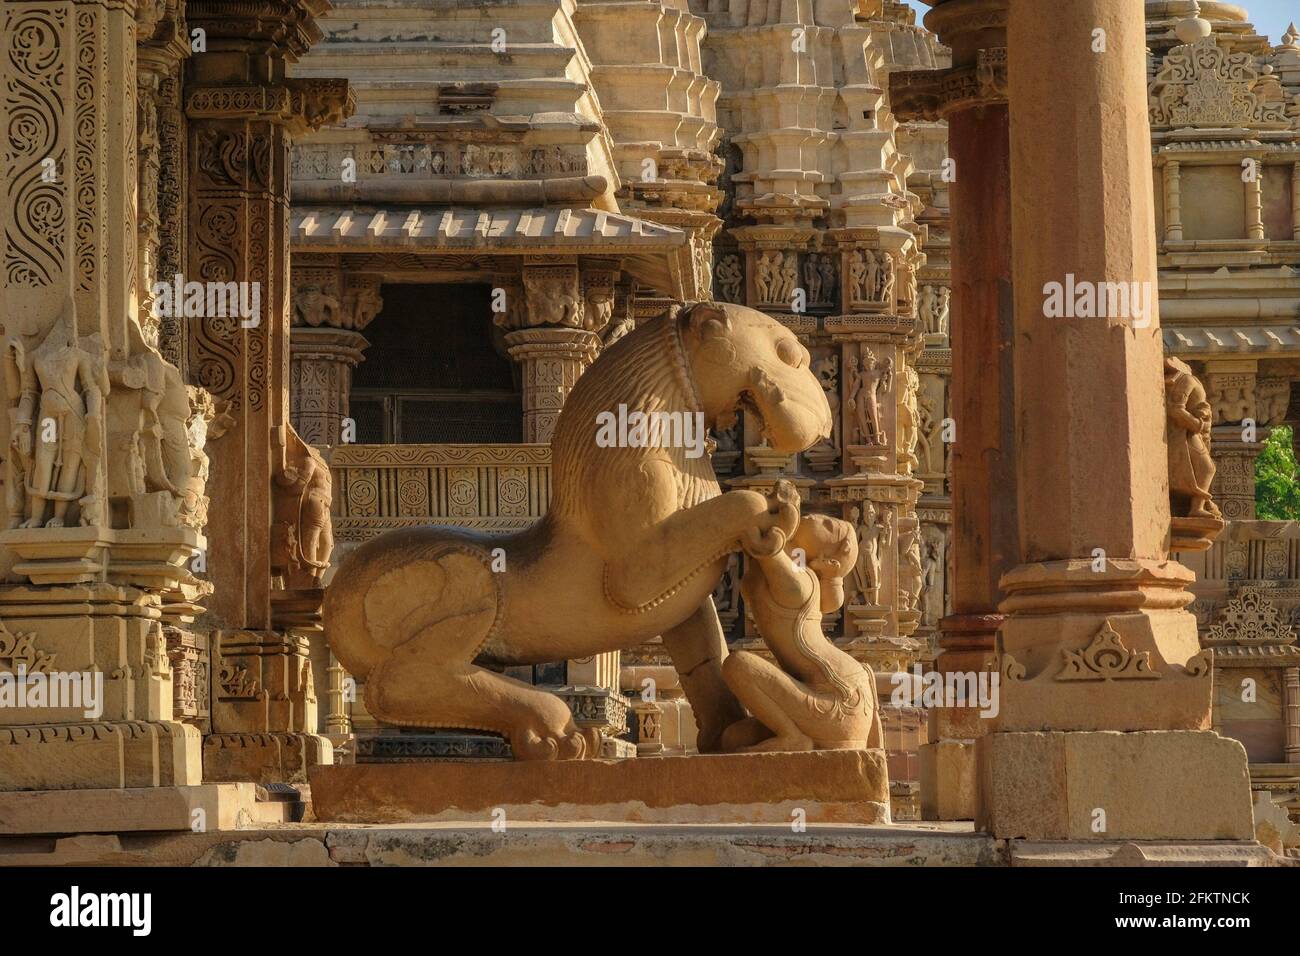 Detail des Mahadeva-Tempels in Khajuraho, Madhya Pradesh, Indien. Gehört zur Khajuraho Group of Monuments, einem UNESCO-Weltkulturerbe. Stockfoto